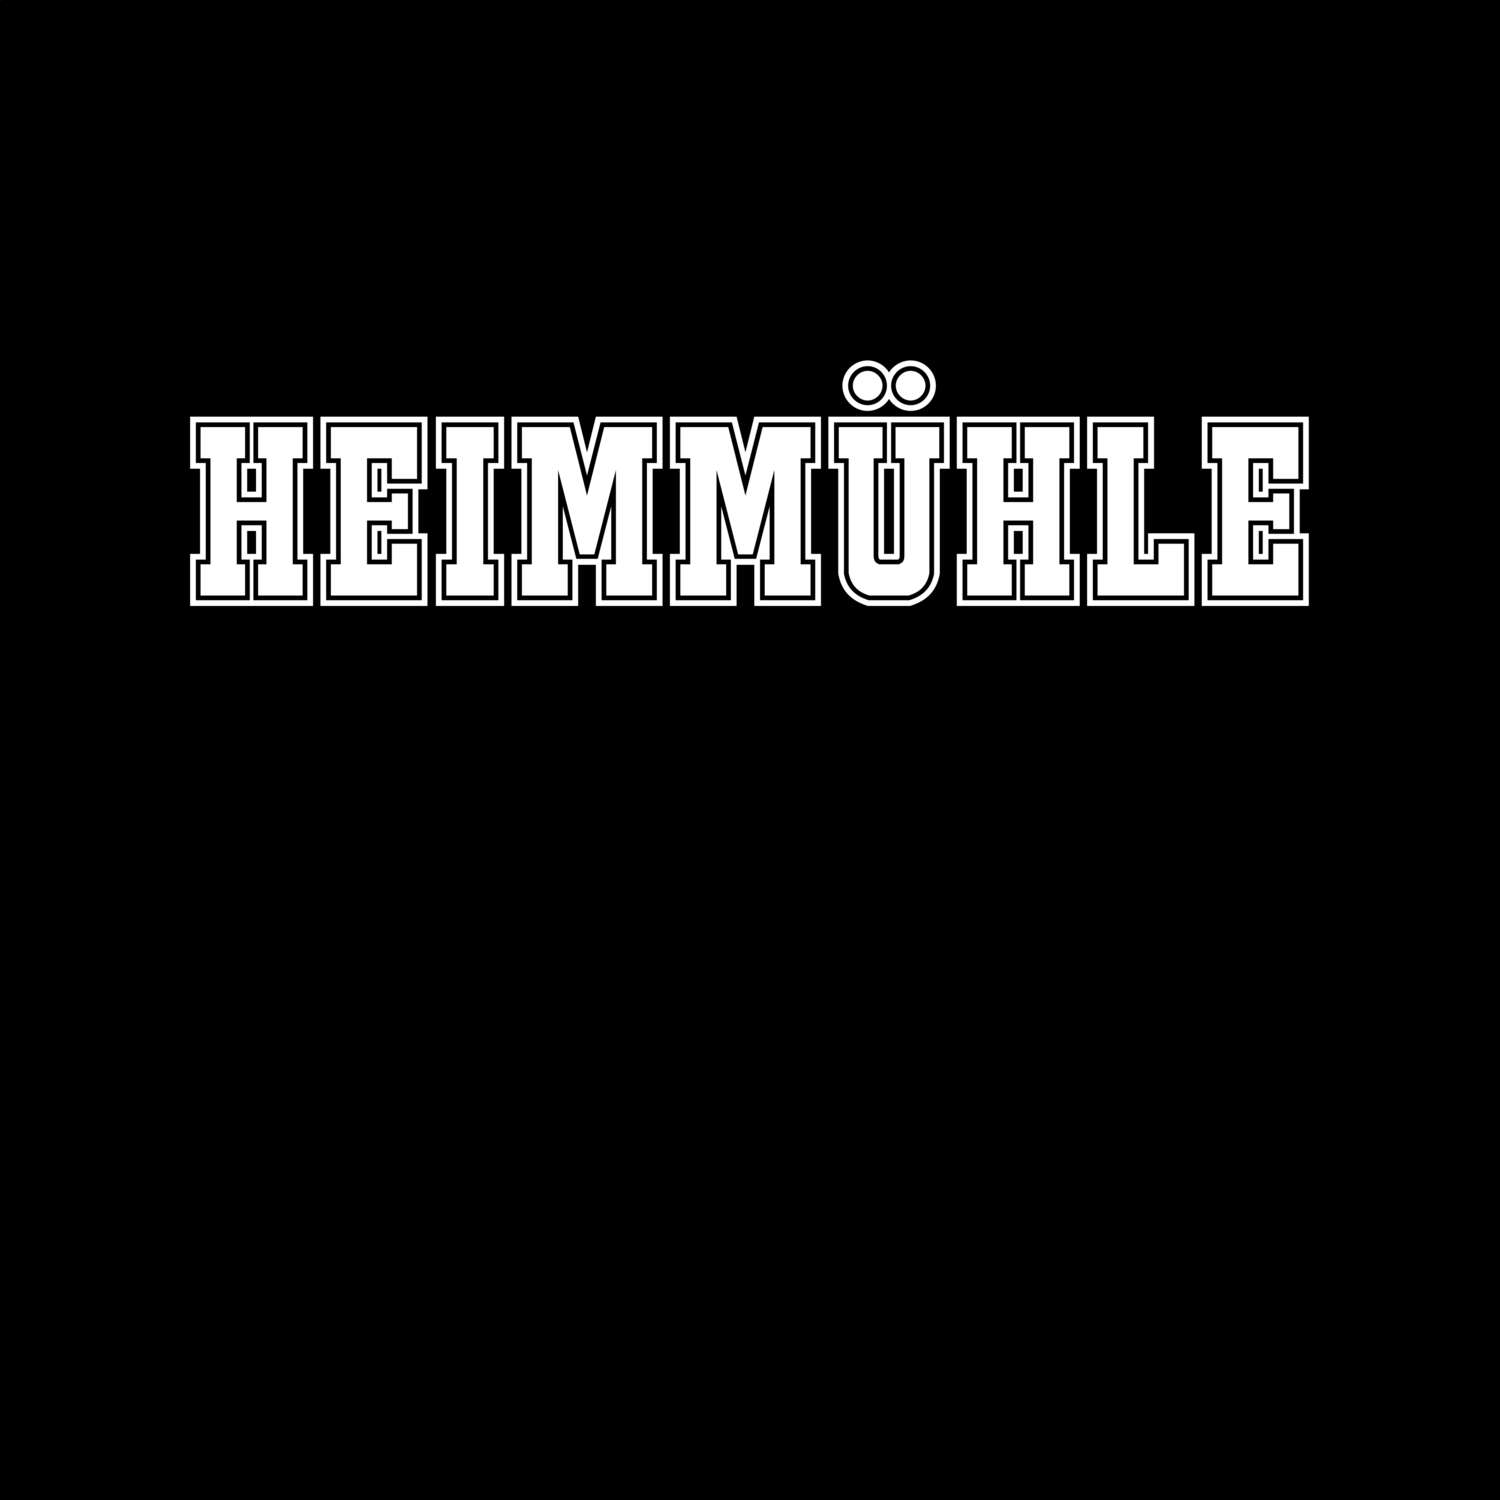 Heimmühle T-Shirt »Classic«